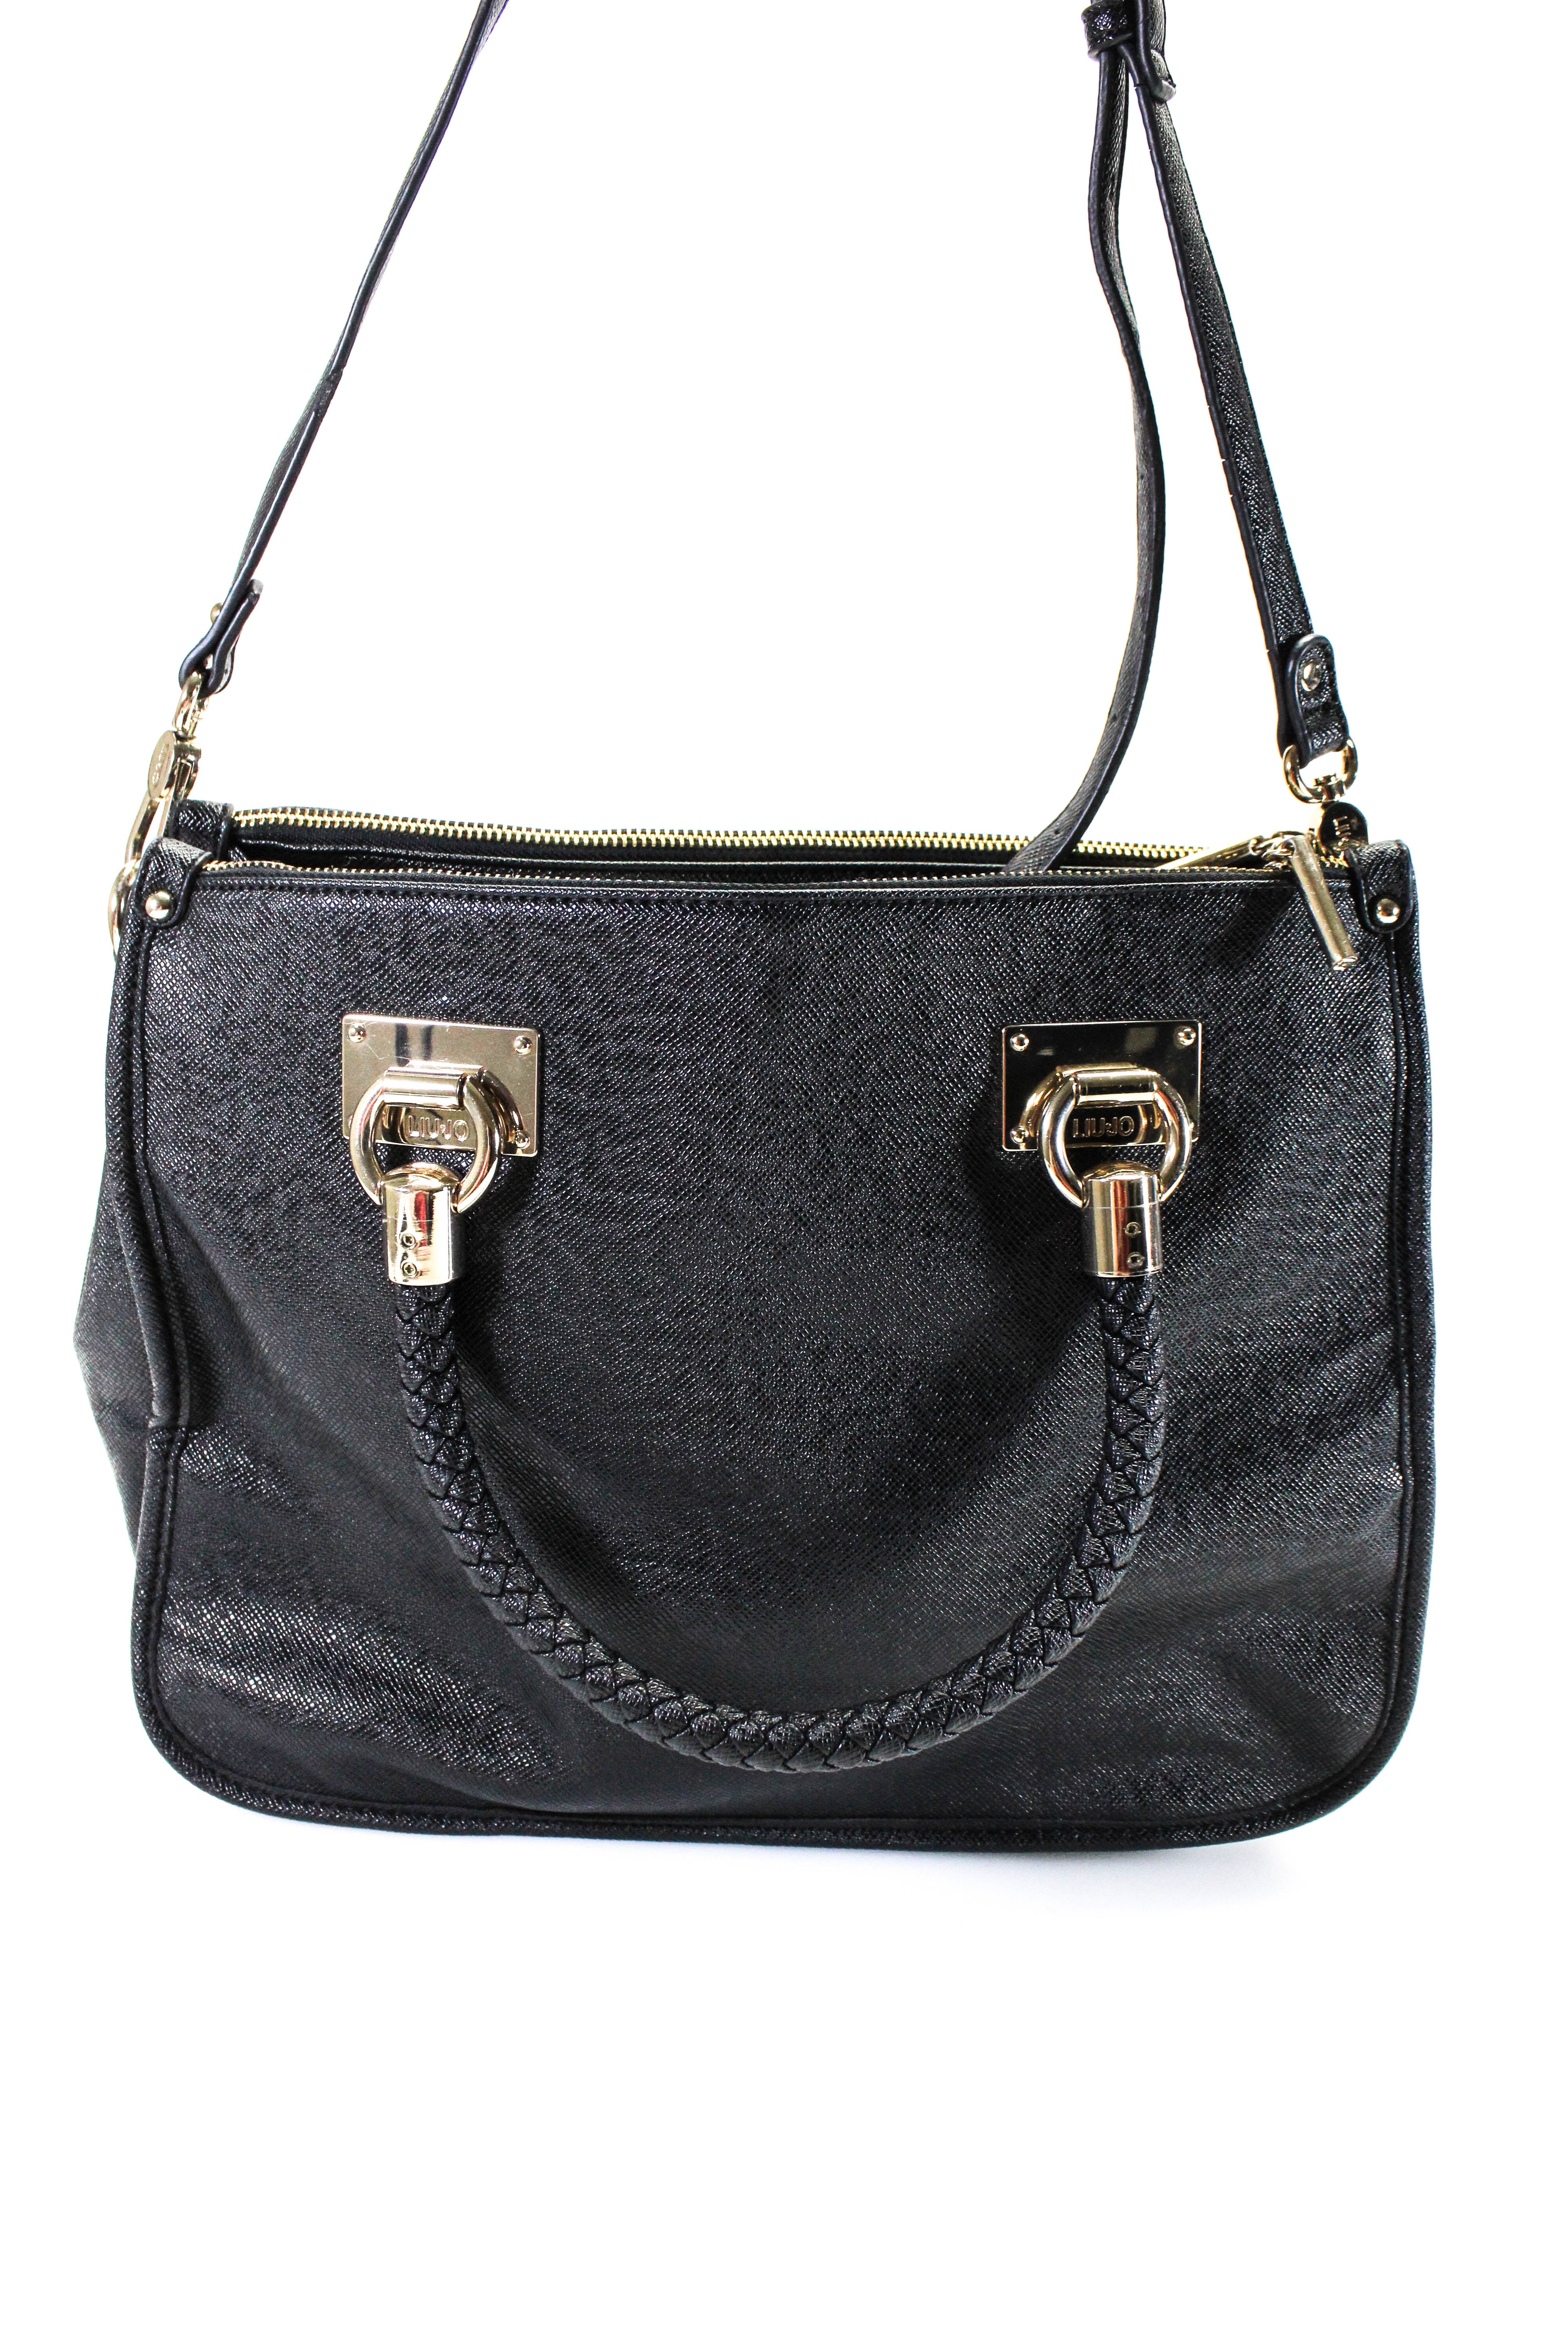 Liu JO Womens Faux Leather Gold Tone Shoulder Handbag Black - Shop Linda's  Stuff